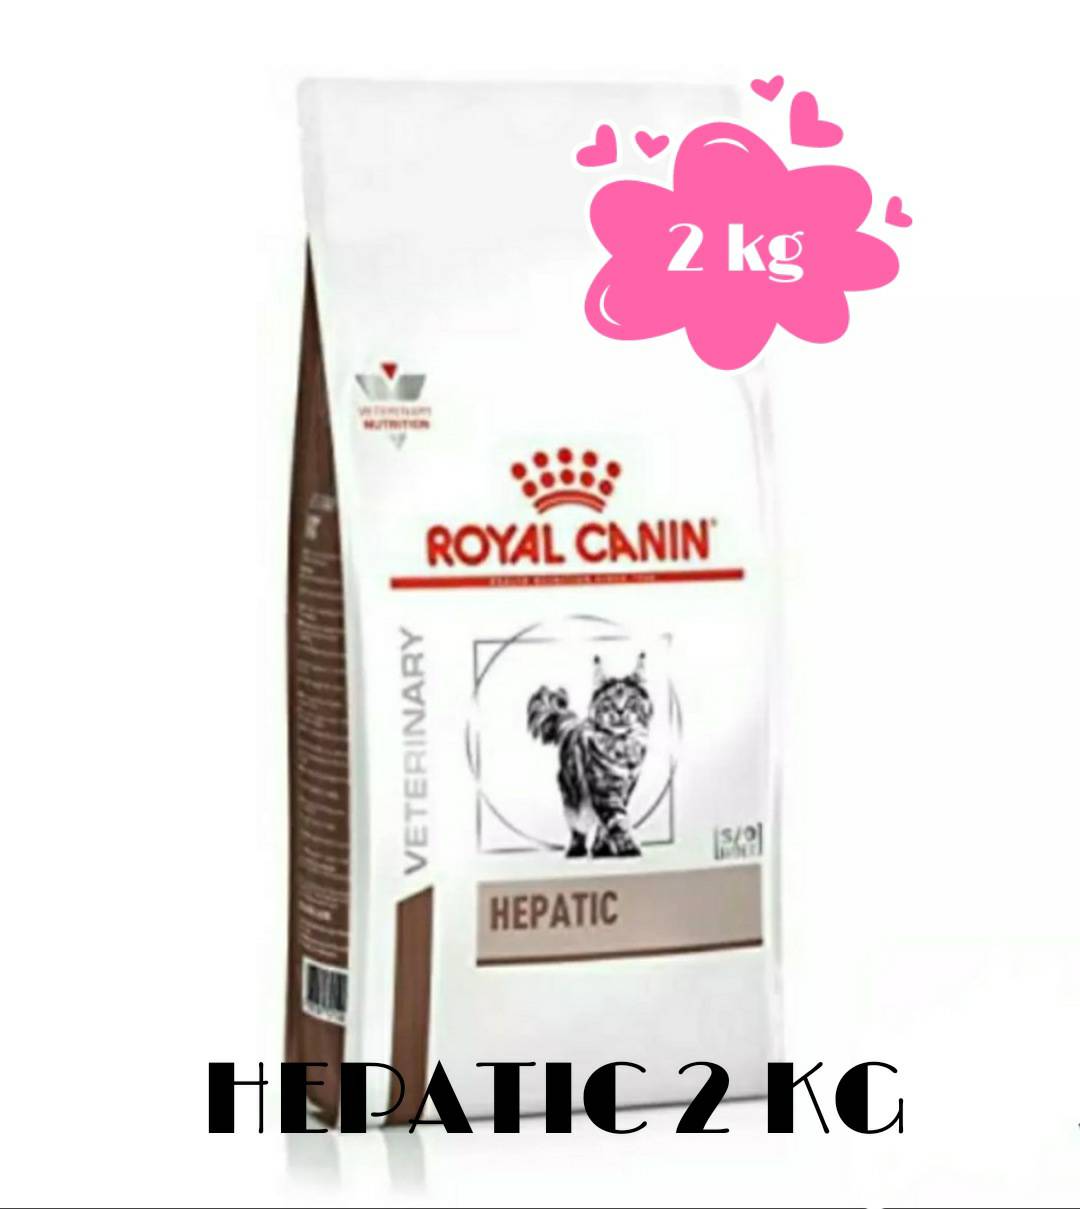 Royal Canin Hepatic 2 kg แมว โรคตับ 